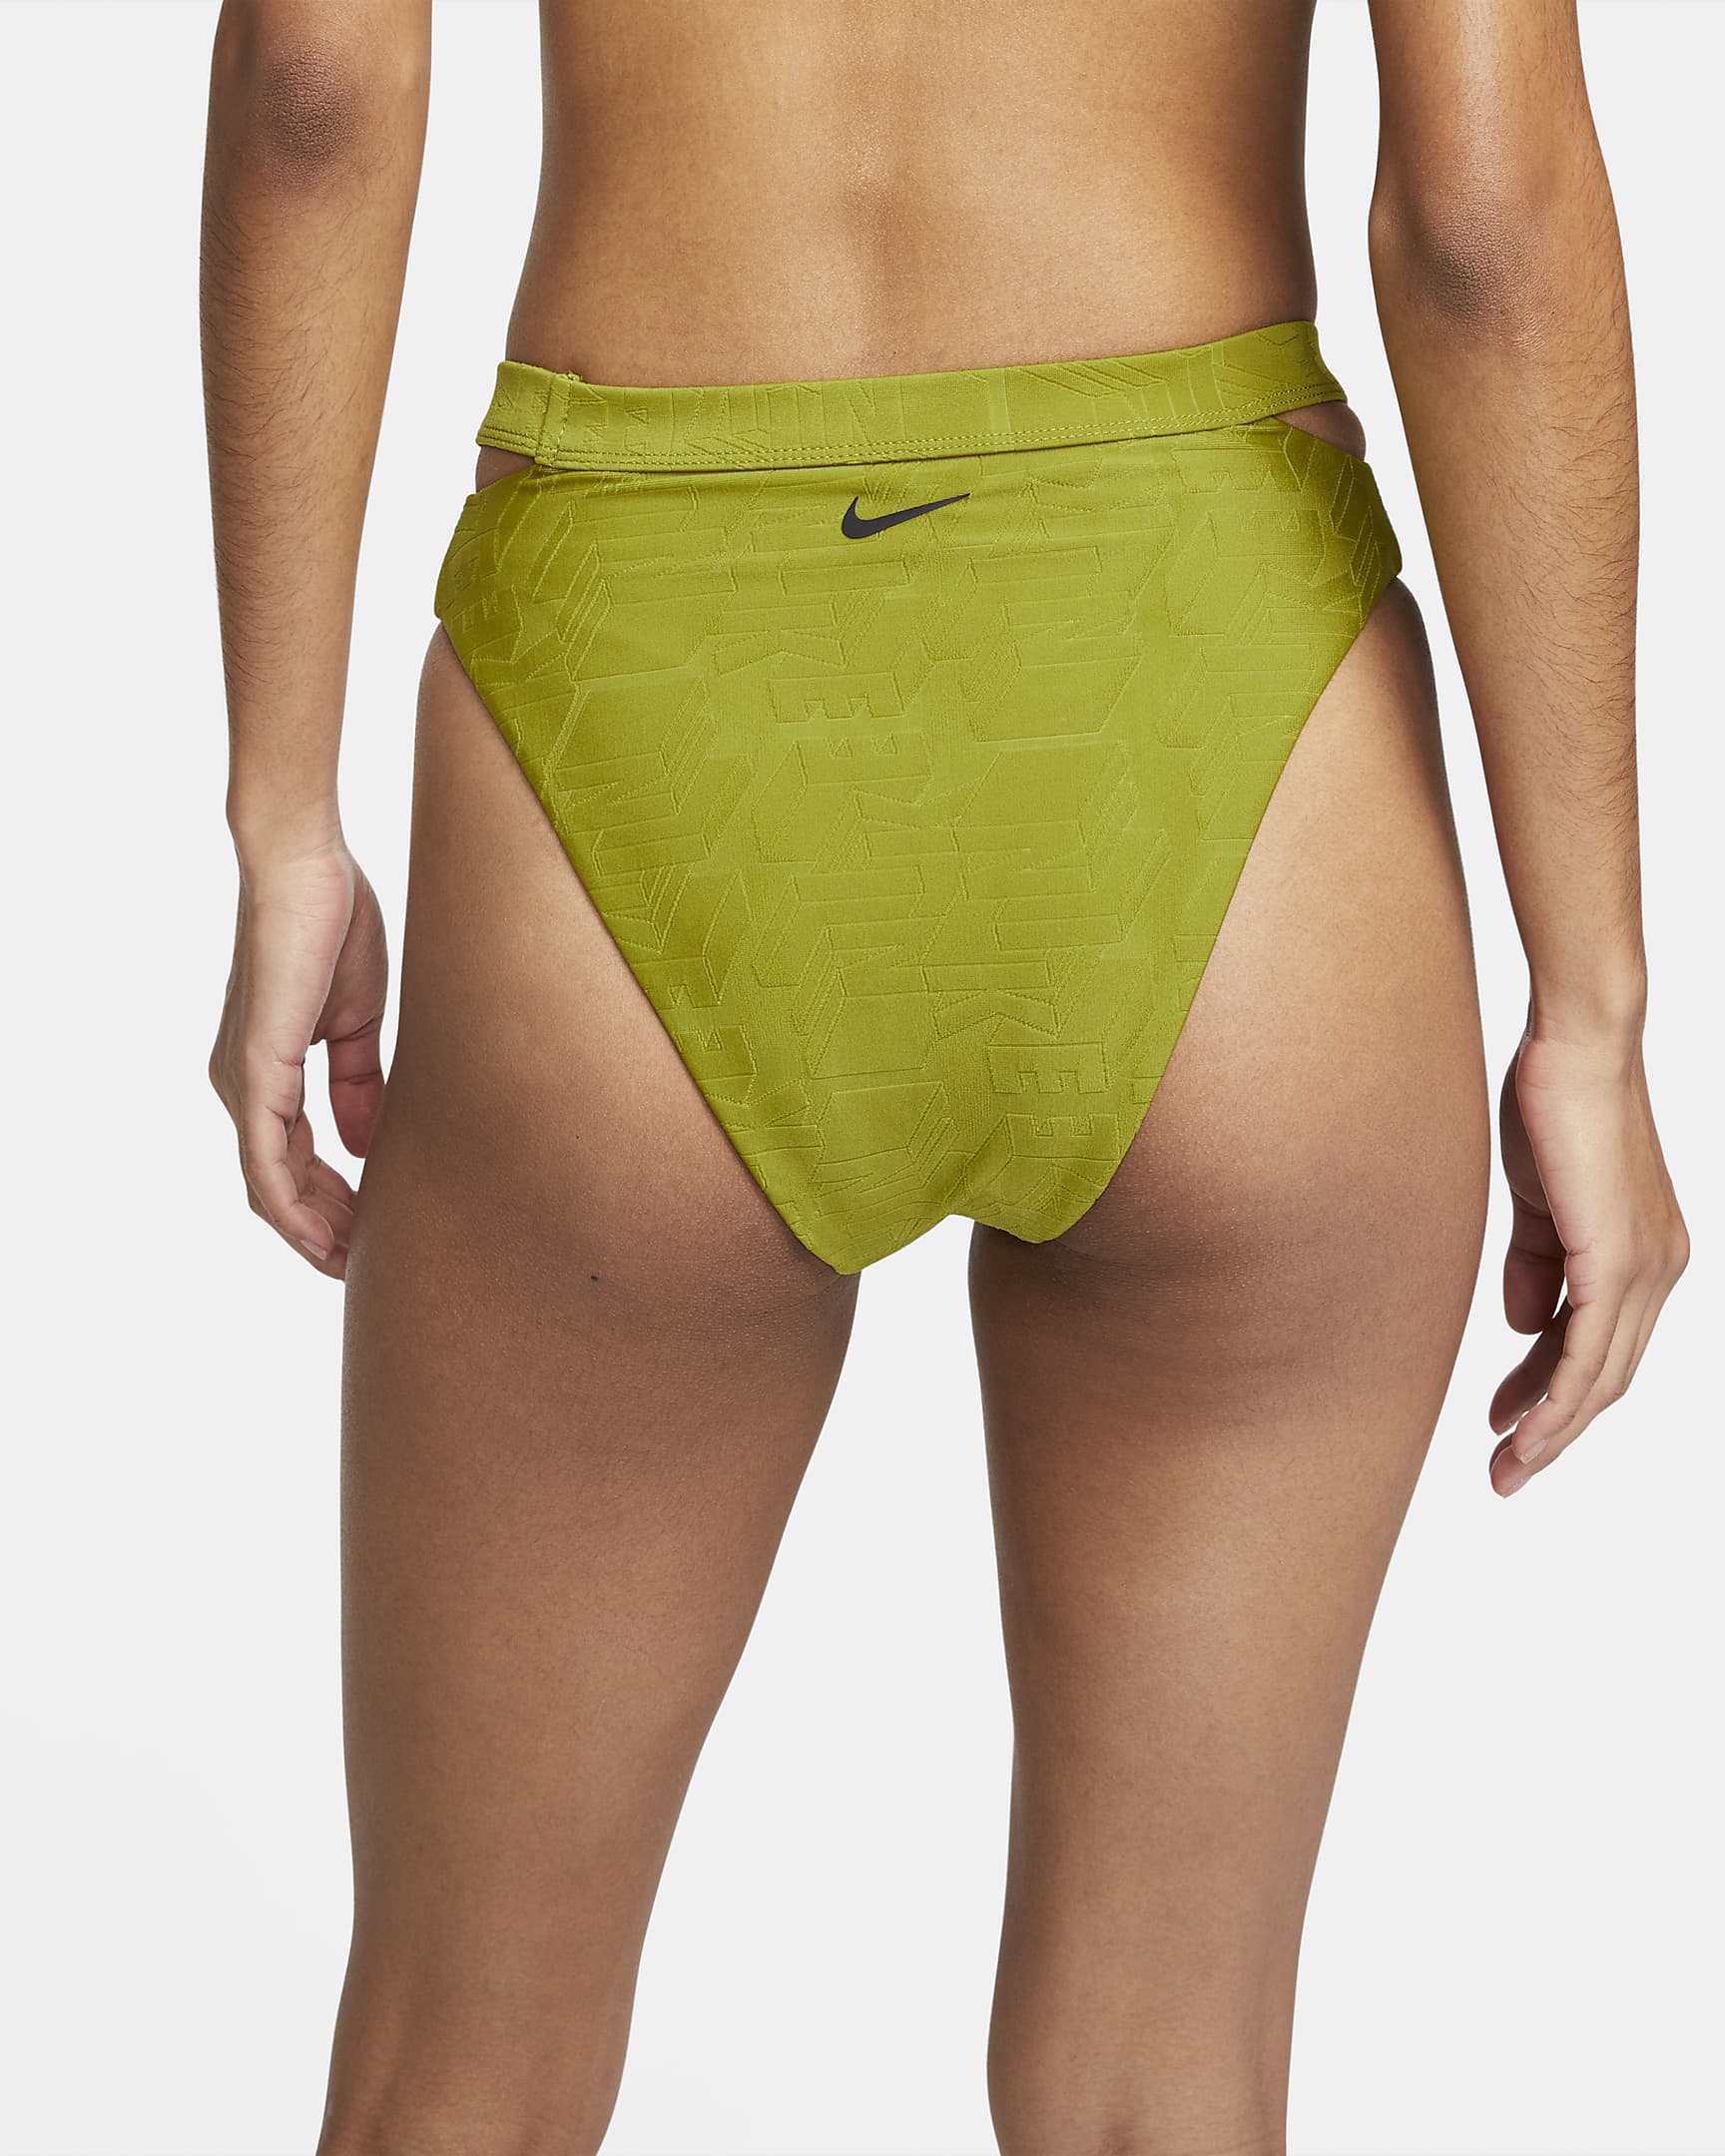 Nike Swim Women's Cut-Out High-Waisted Bikini Bottoms - Moss/Black